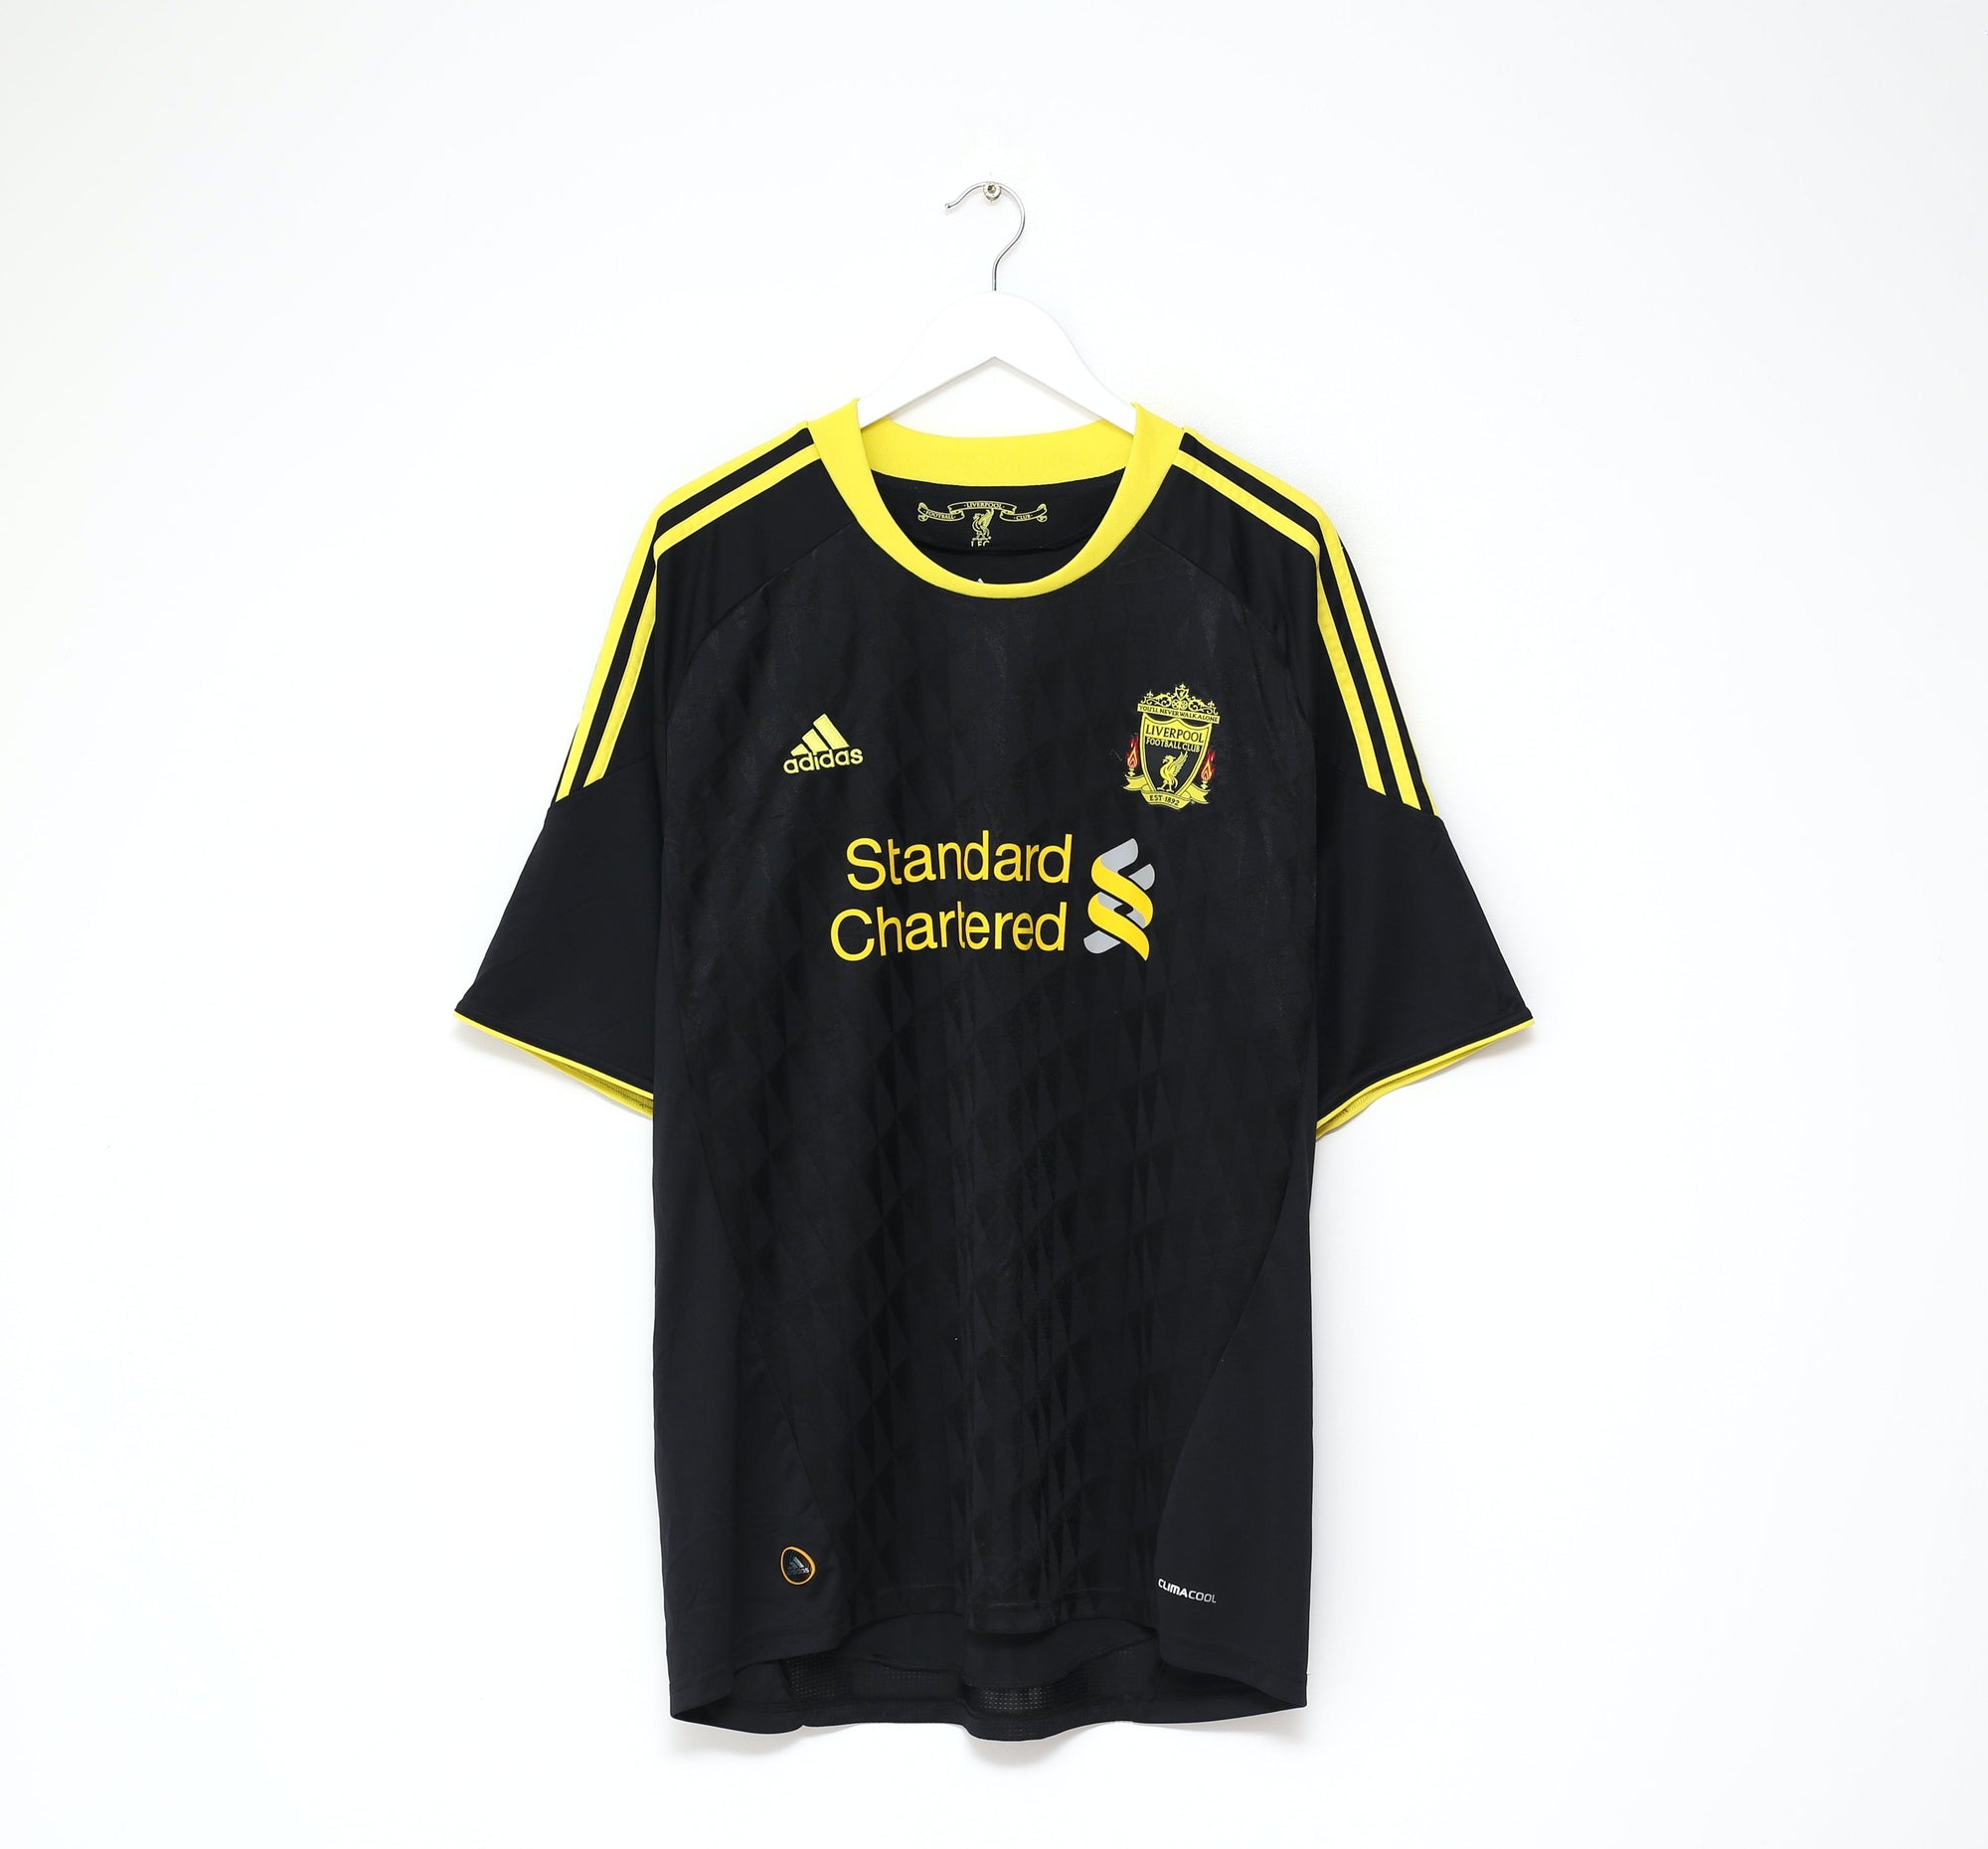 2010/11 GERRARD #8 Liverpool Vintage adidas Third Football Shirt (XL)